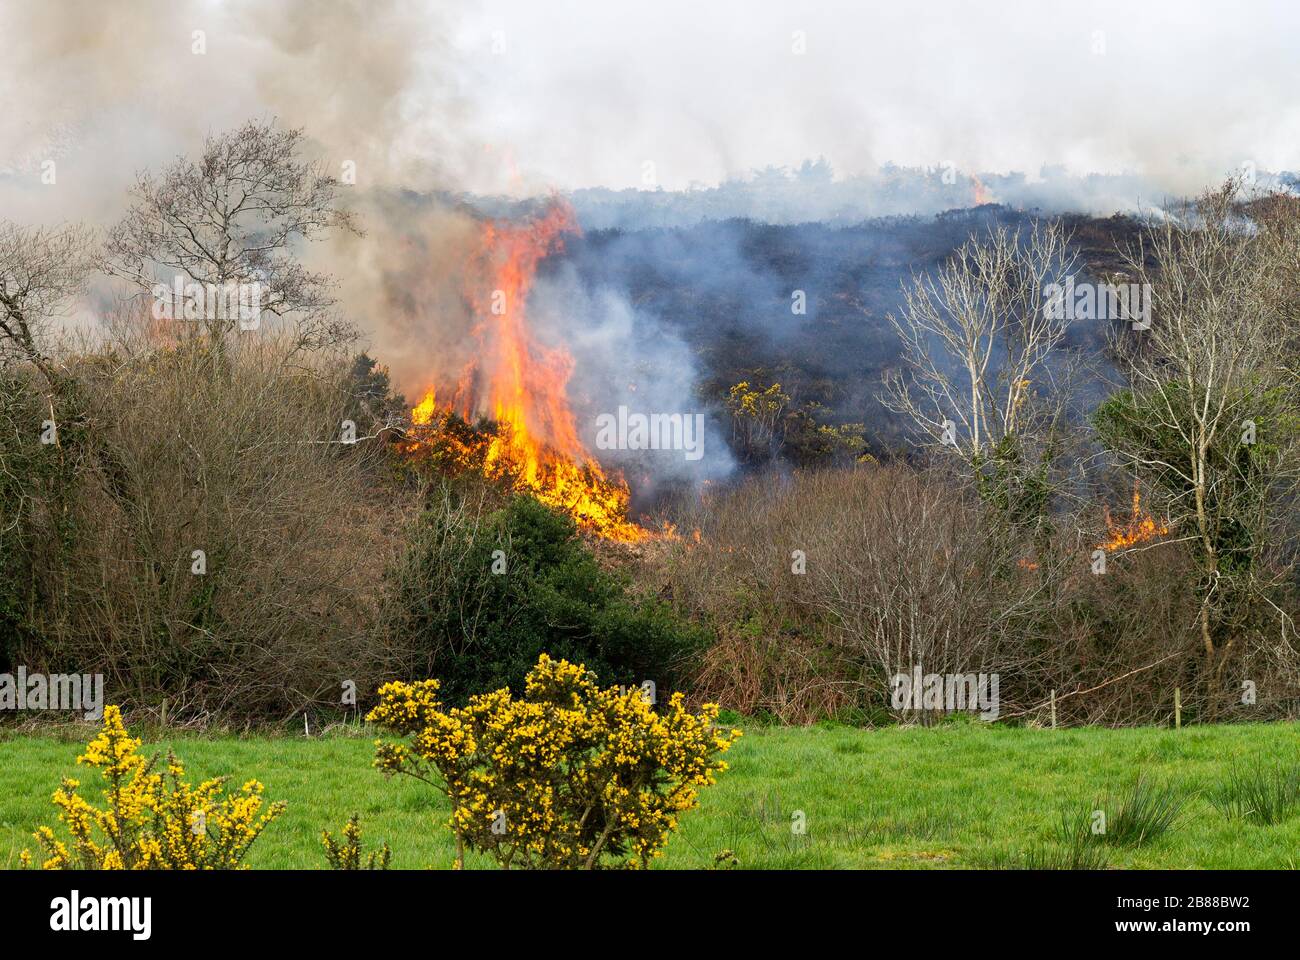 Gorse fire spreading across heathland Stock Photo